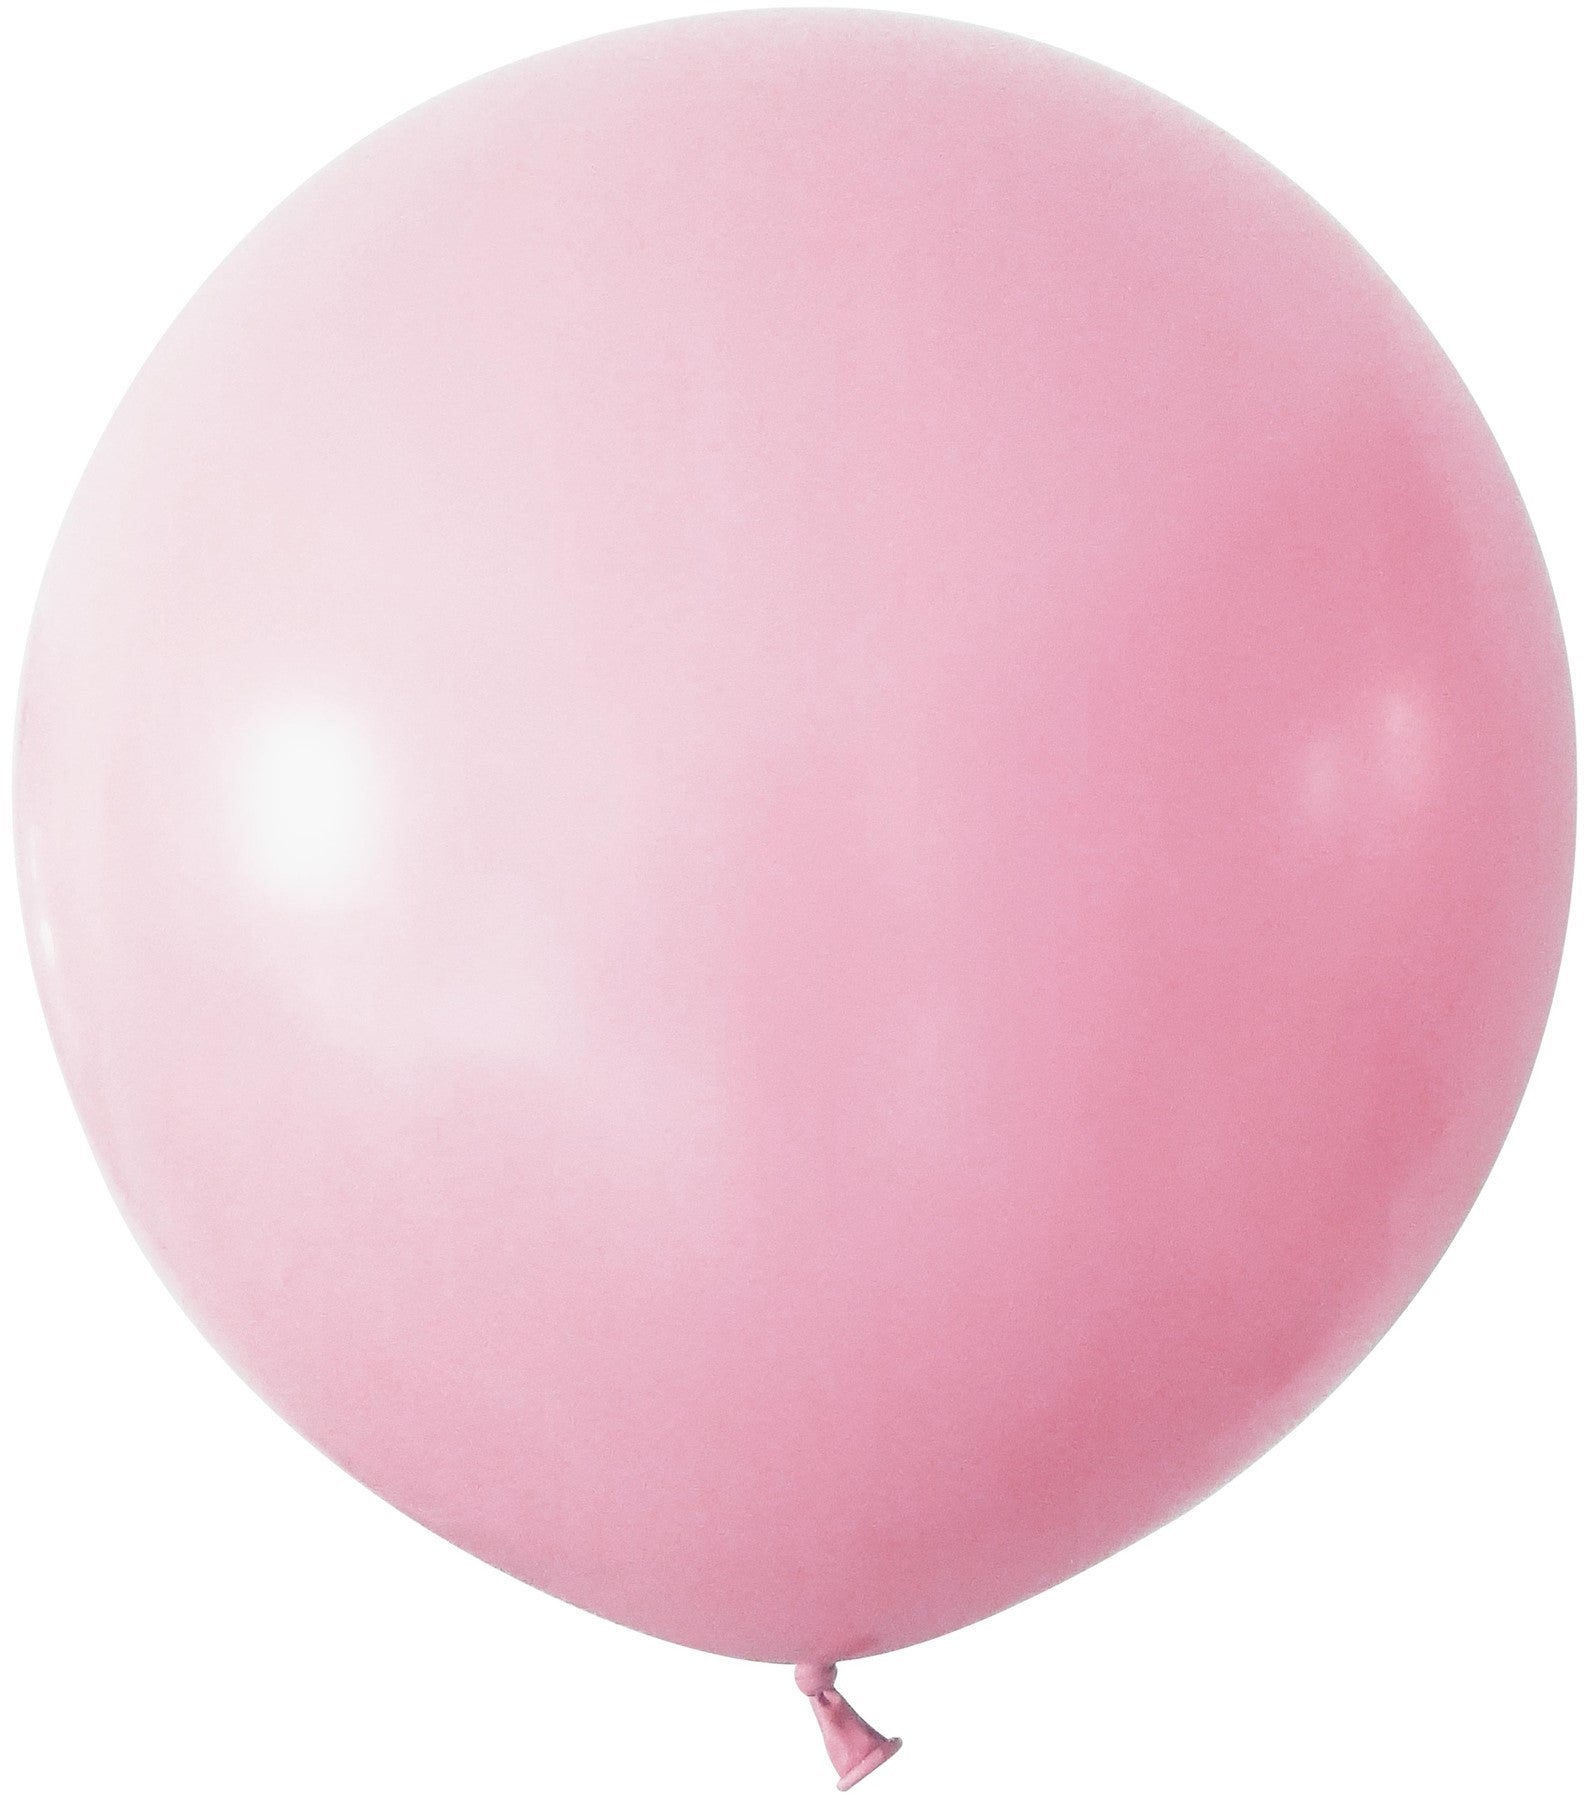 View Macaron Pink Jumbo Latex Balloon 24 inch Pk 3 information